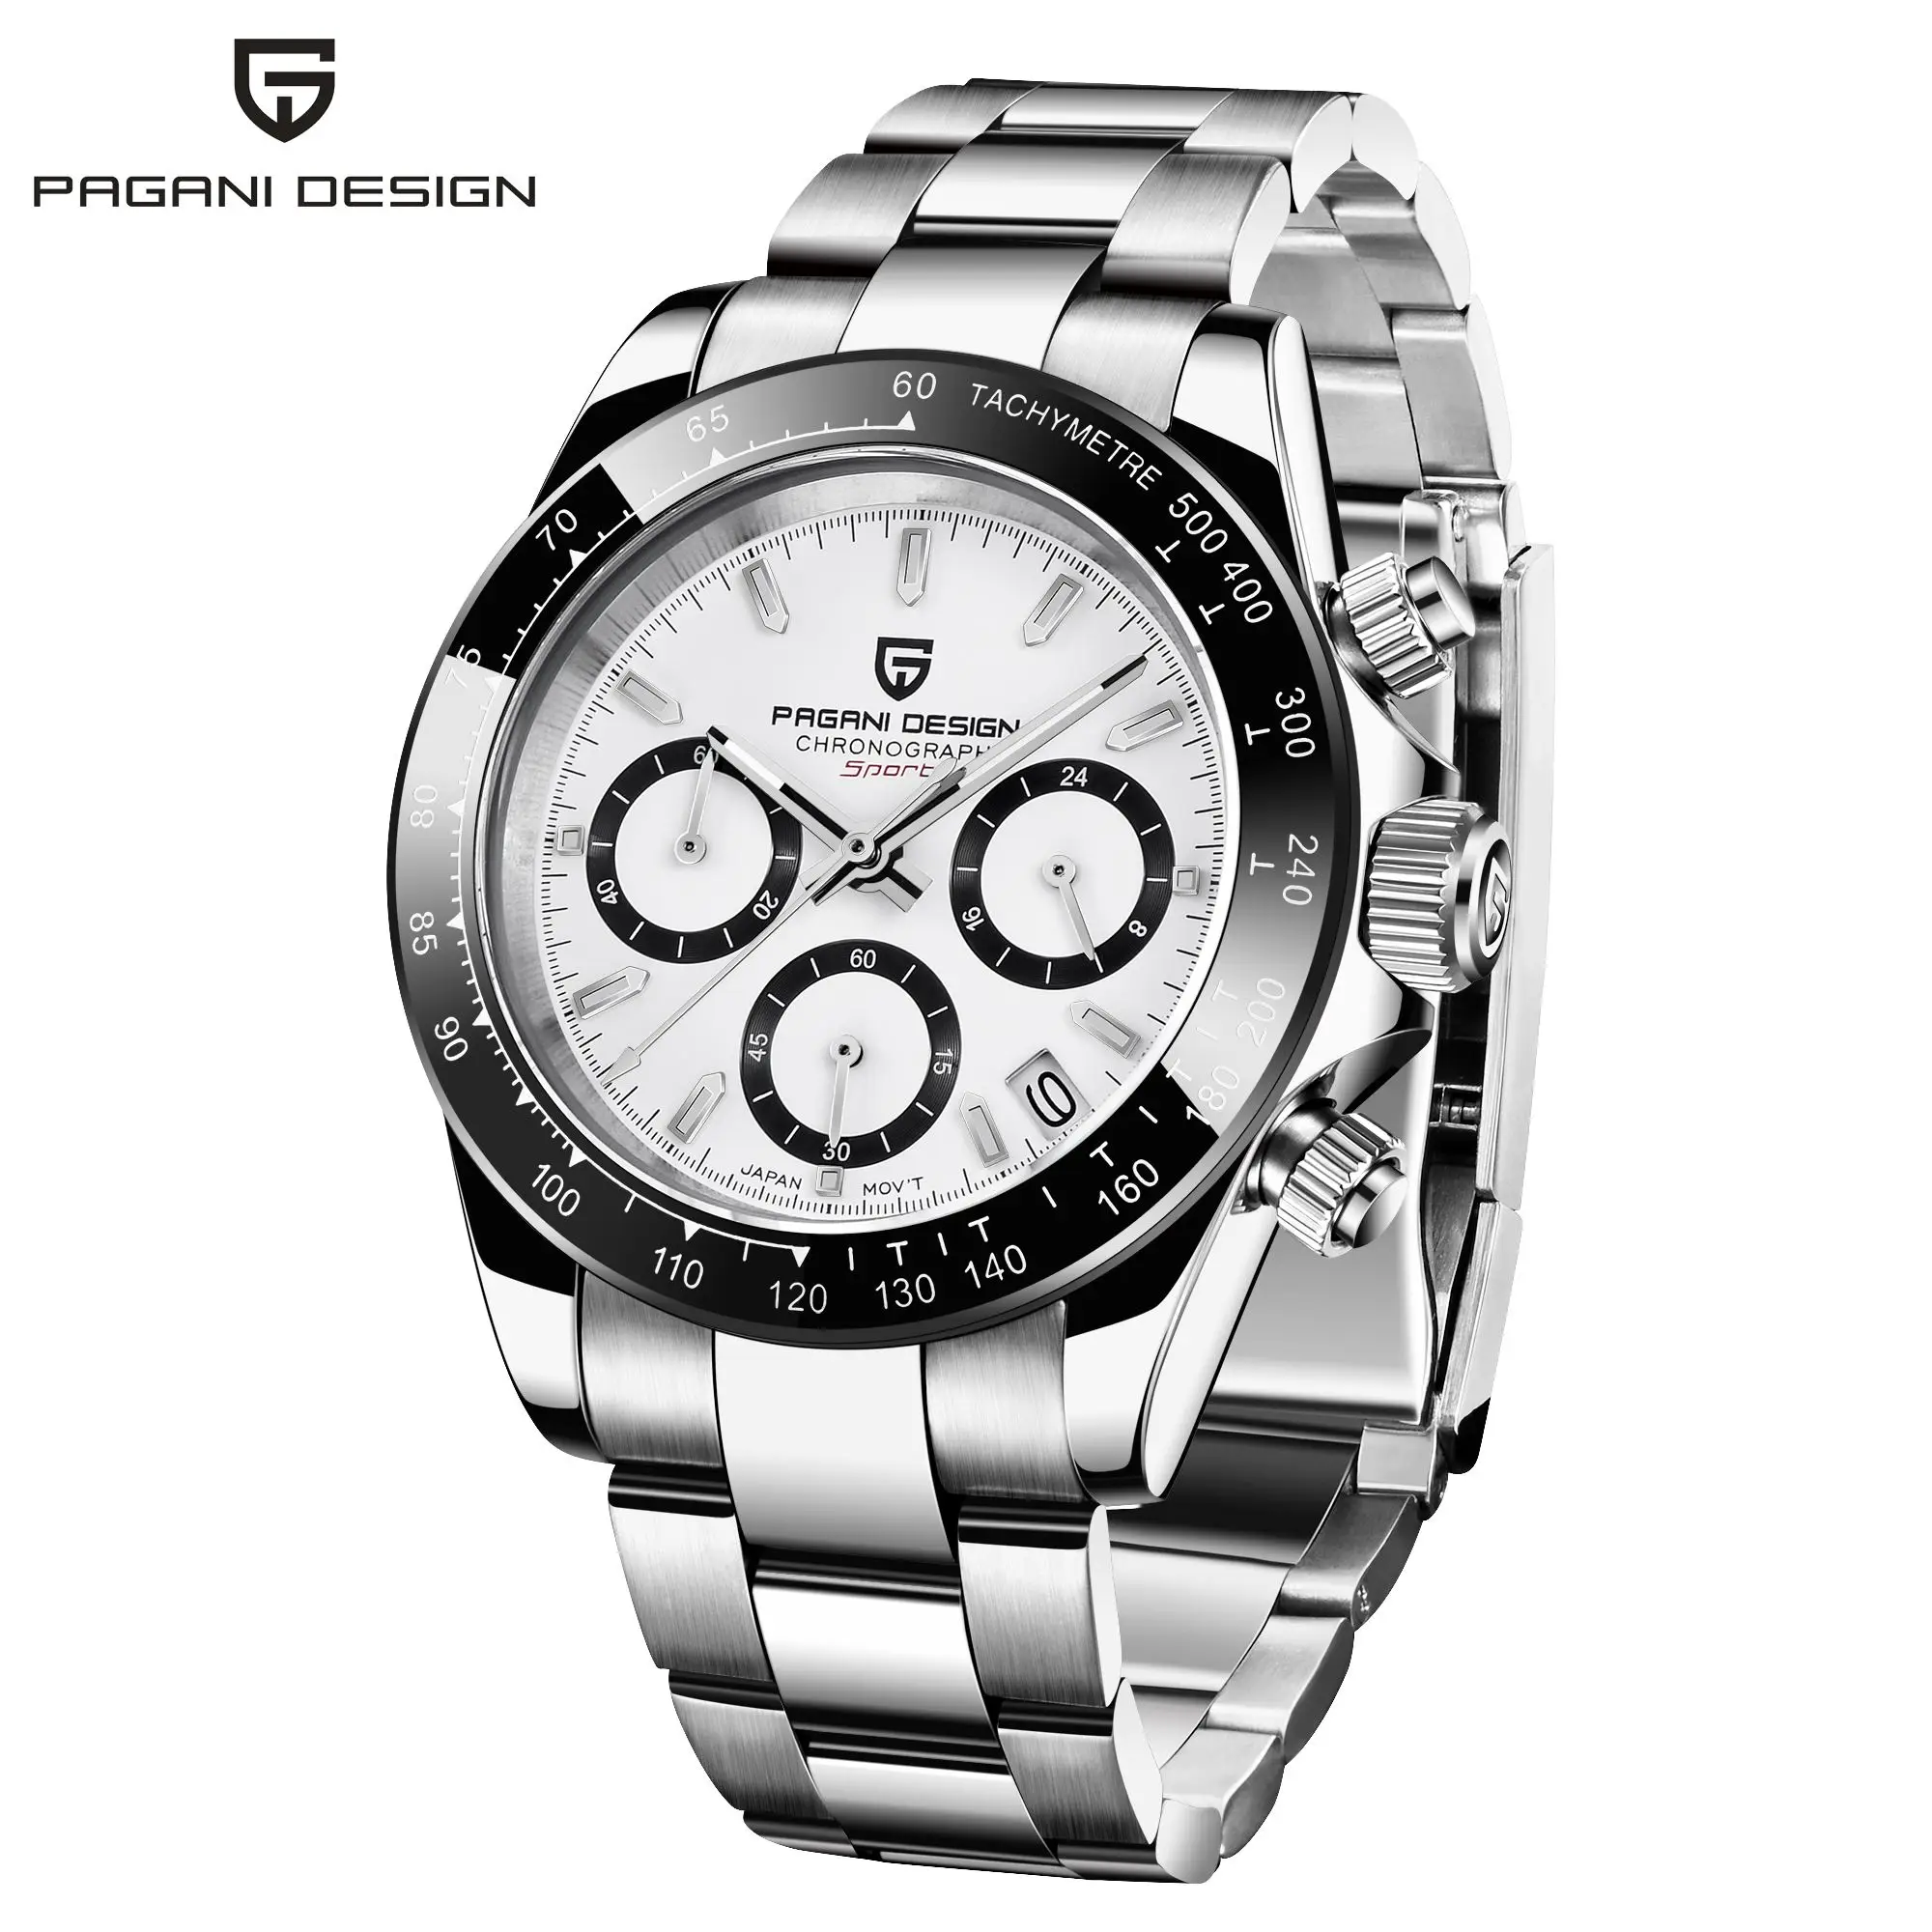 

reloj pagani design 1644 10atm water resistant OEM luxury men quartz wrist chronograph japan movement stainless steel watch